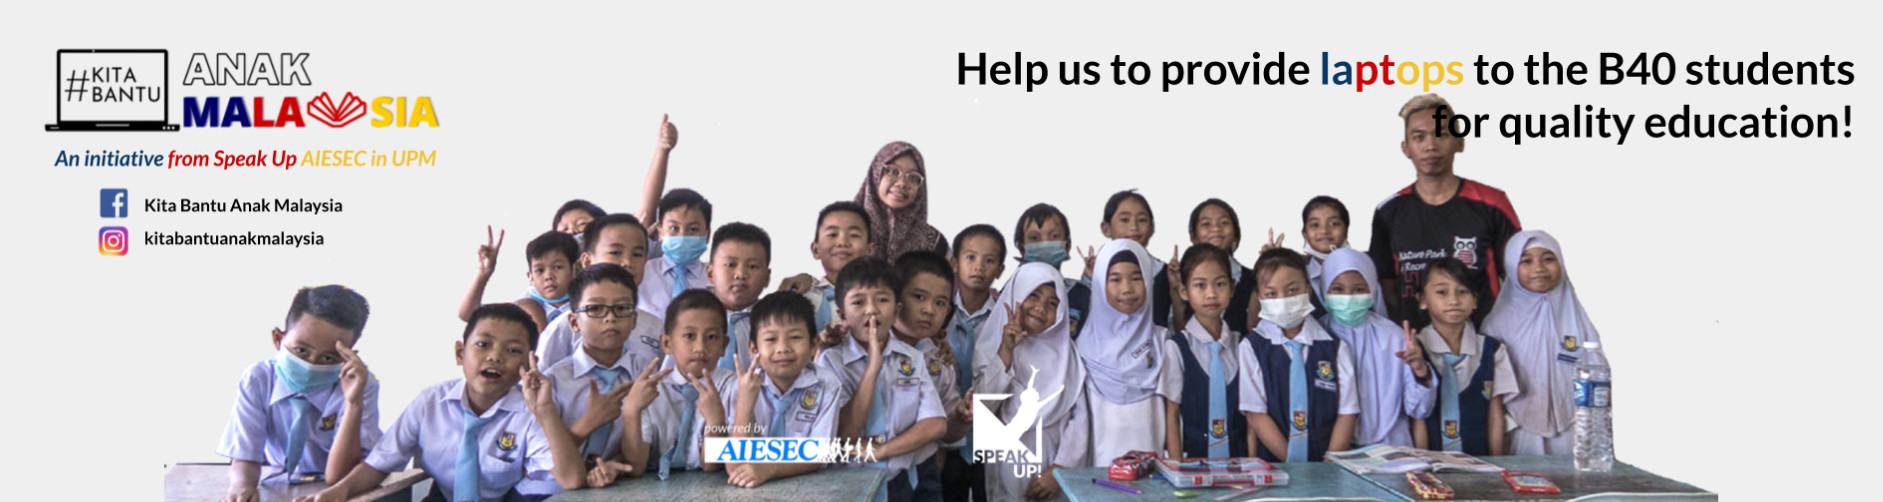 Kita Bantu Anak Malaysia - an initiative from Speak Up AIESEC in UPM